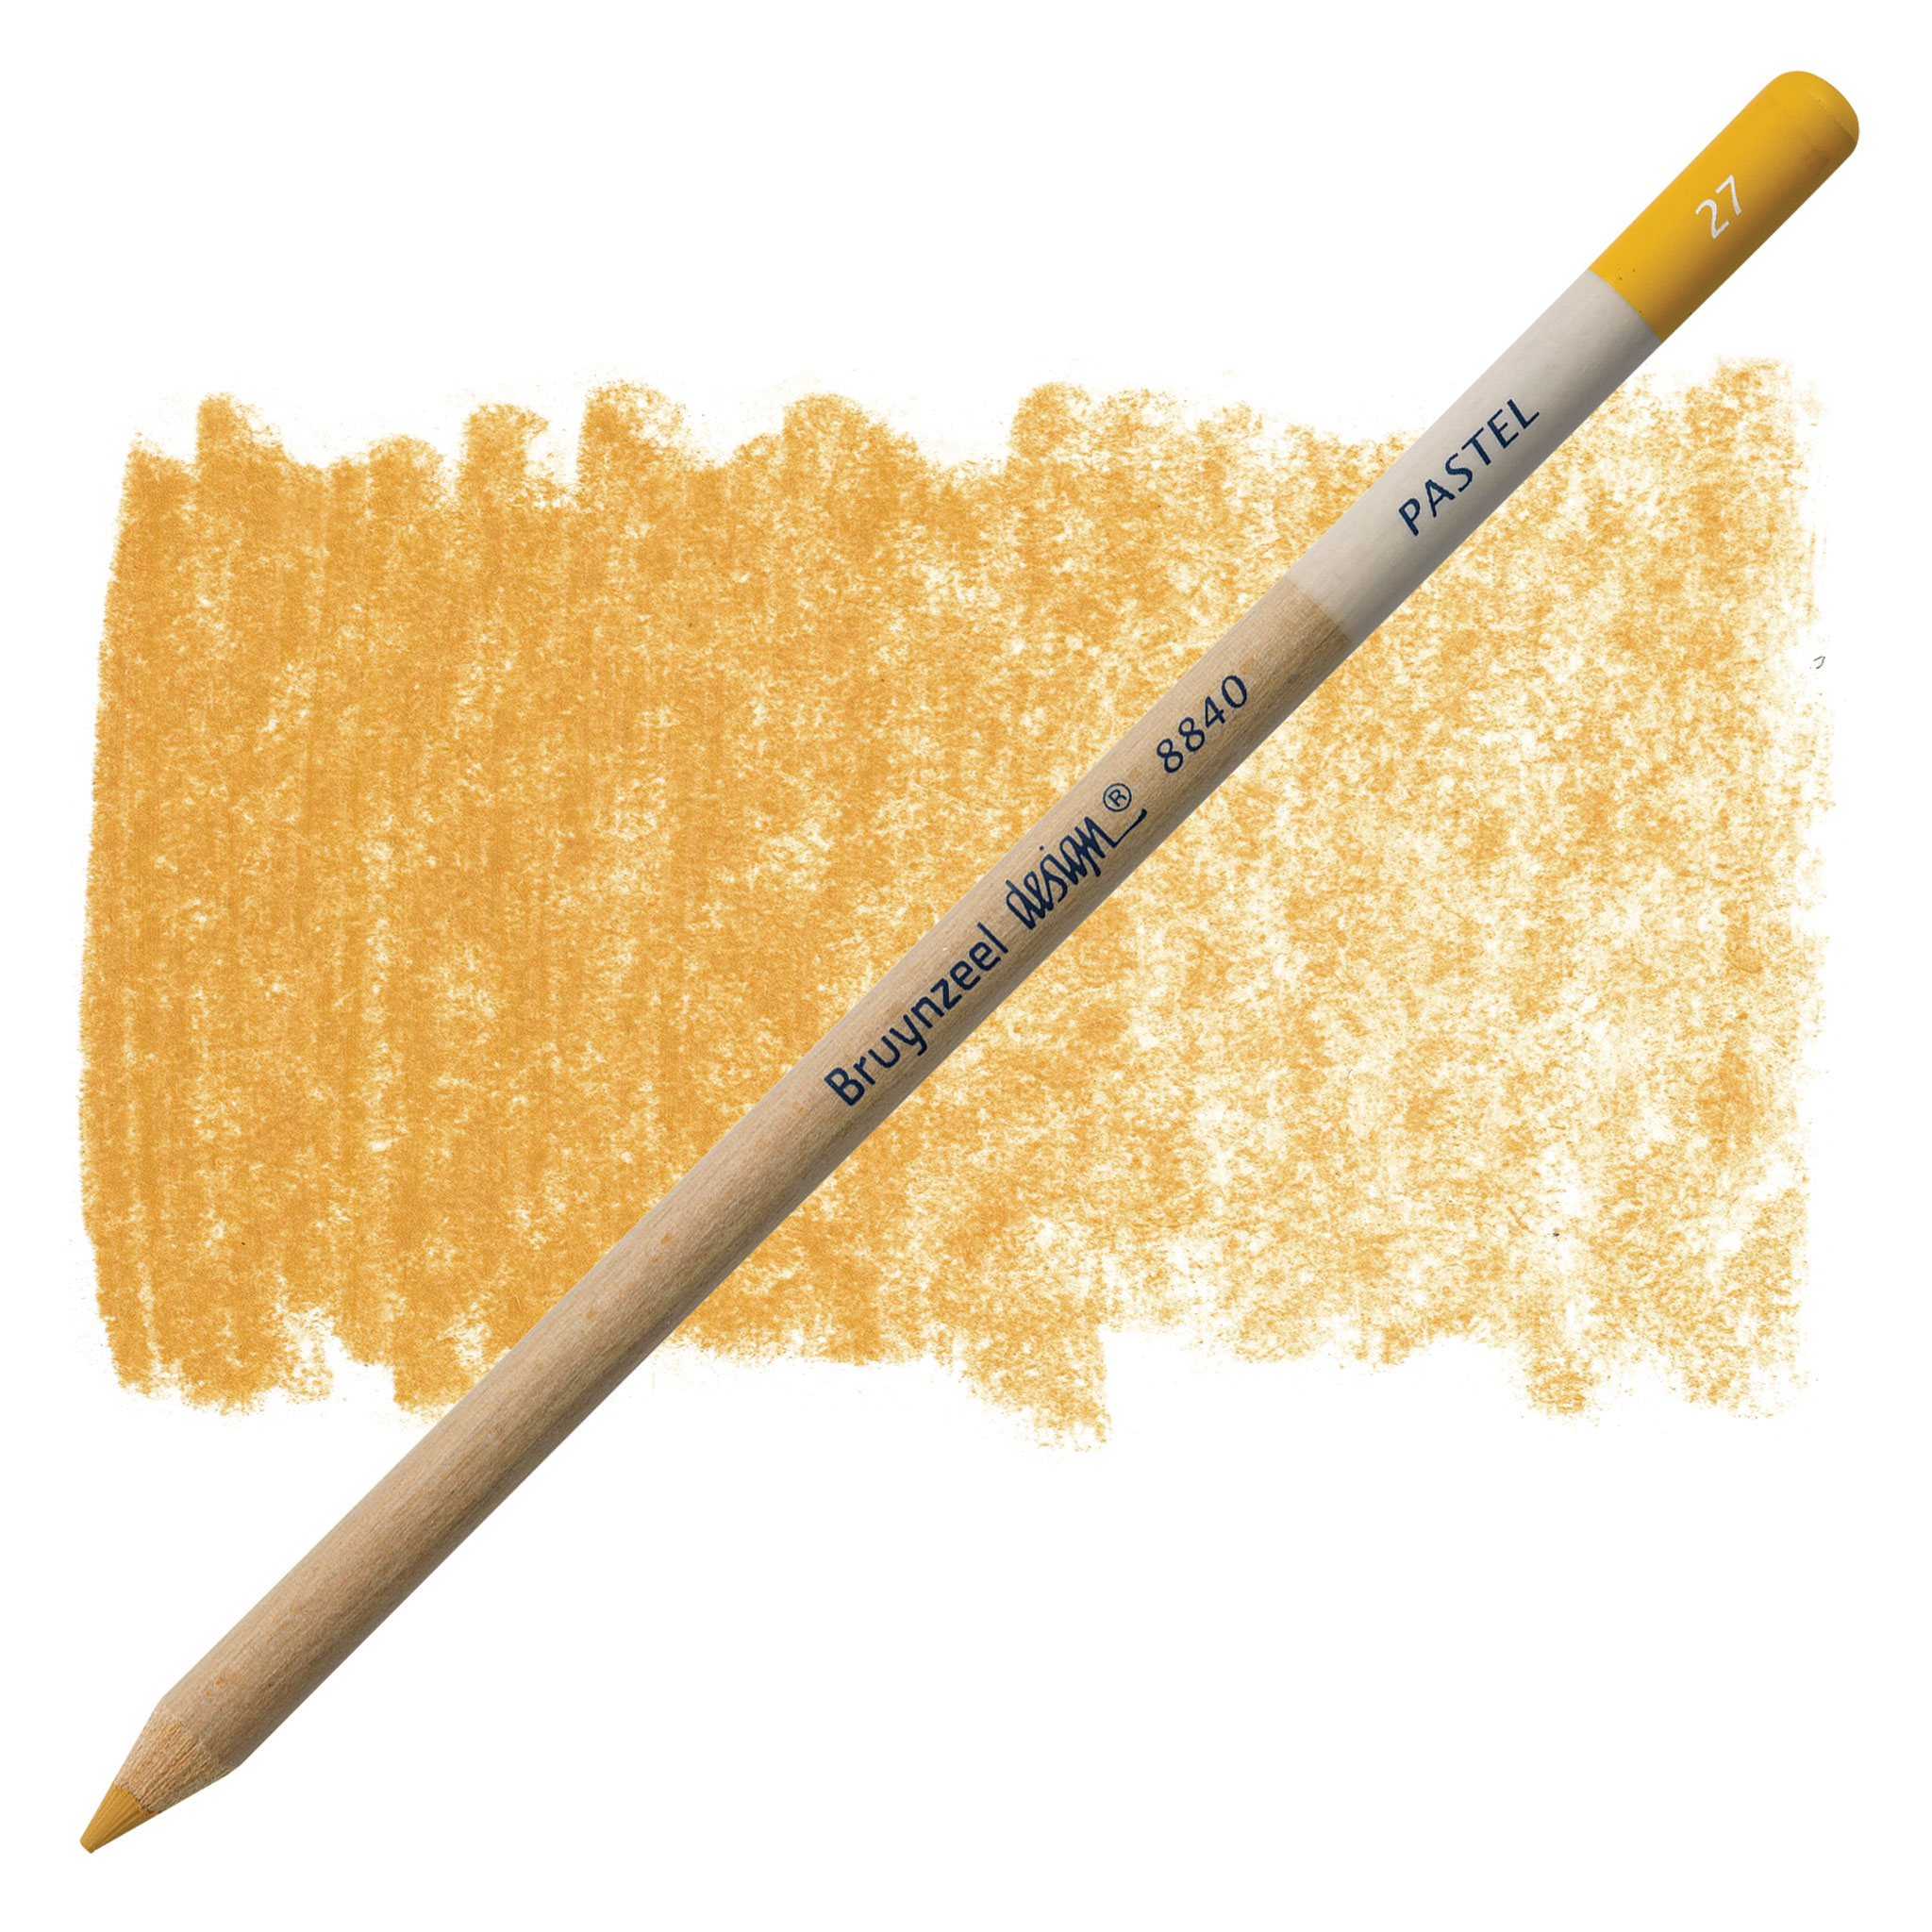 Bruynzeel Design Pastel Pencils and Sets